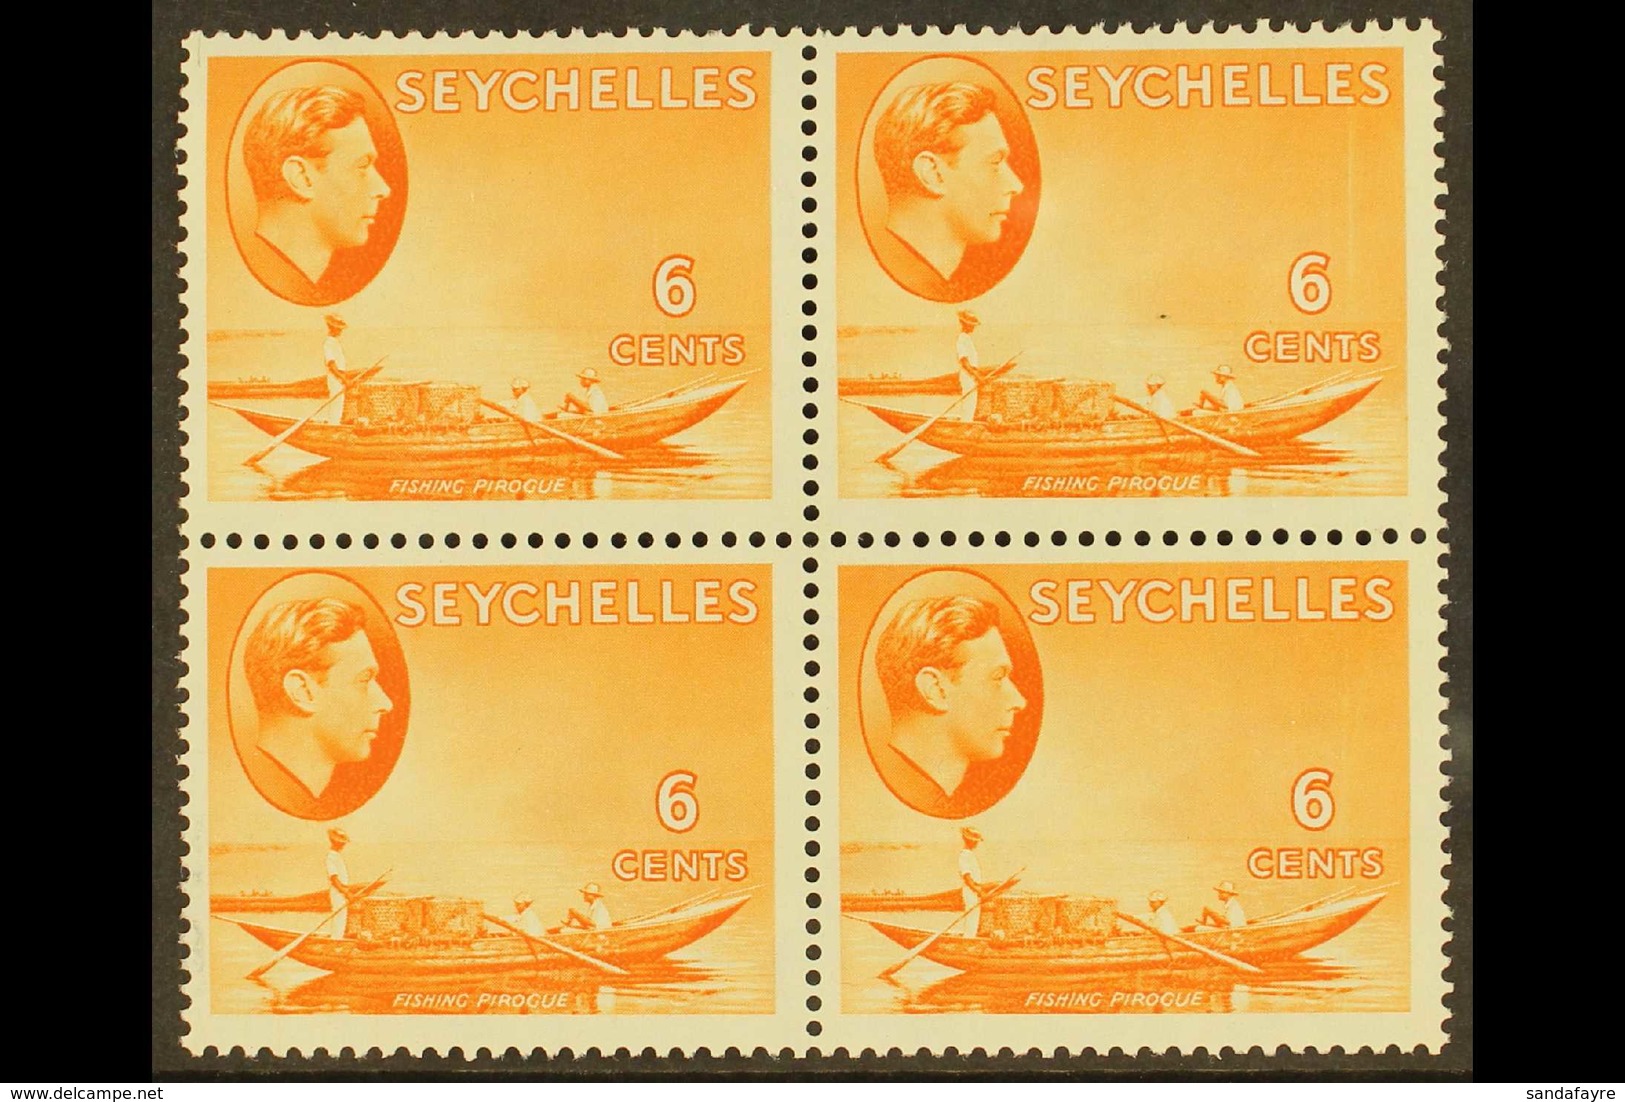 1938-49 NHM MULTIPLE 6c Orange On Chalky Paper, SG 137, Block Of 4, Never Hinged Mint. Lovely, Post Office Fresh Conditi - Seychellen (...-1976)